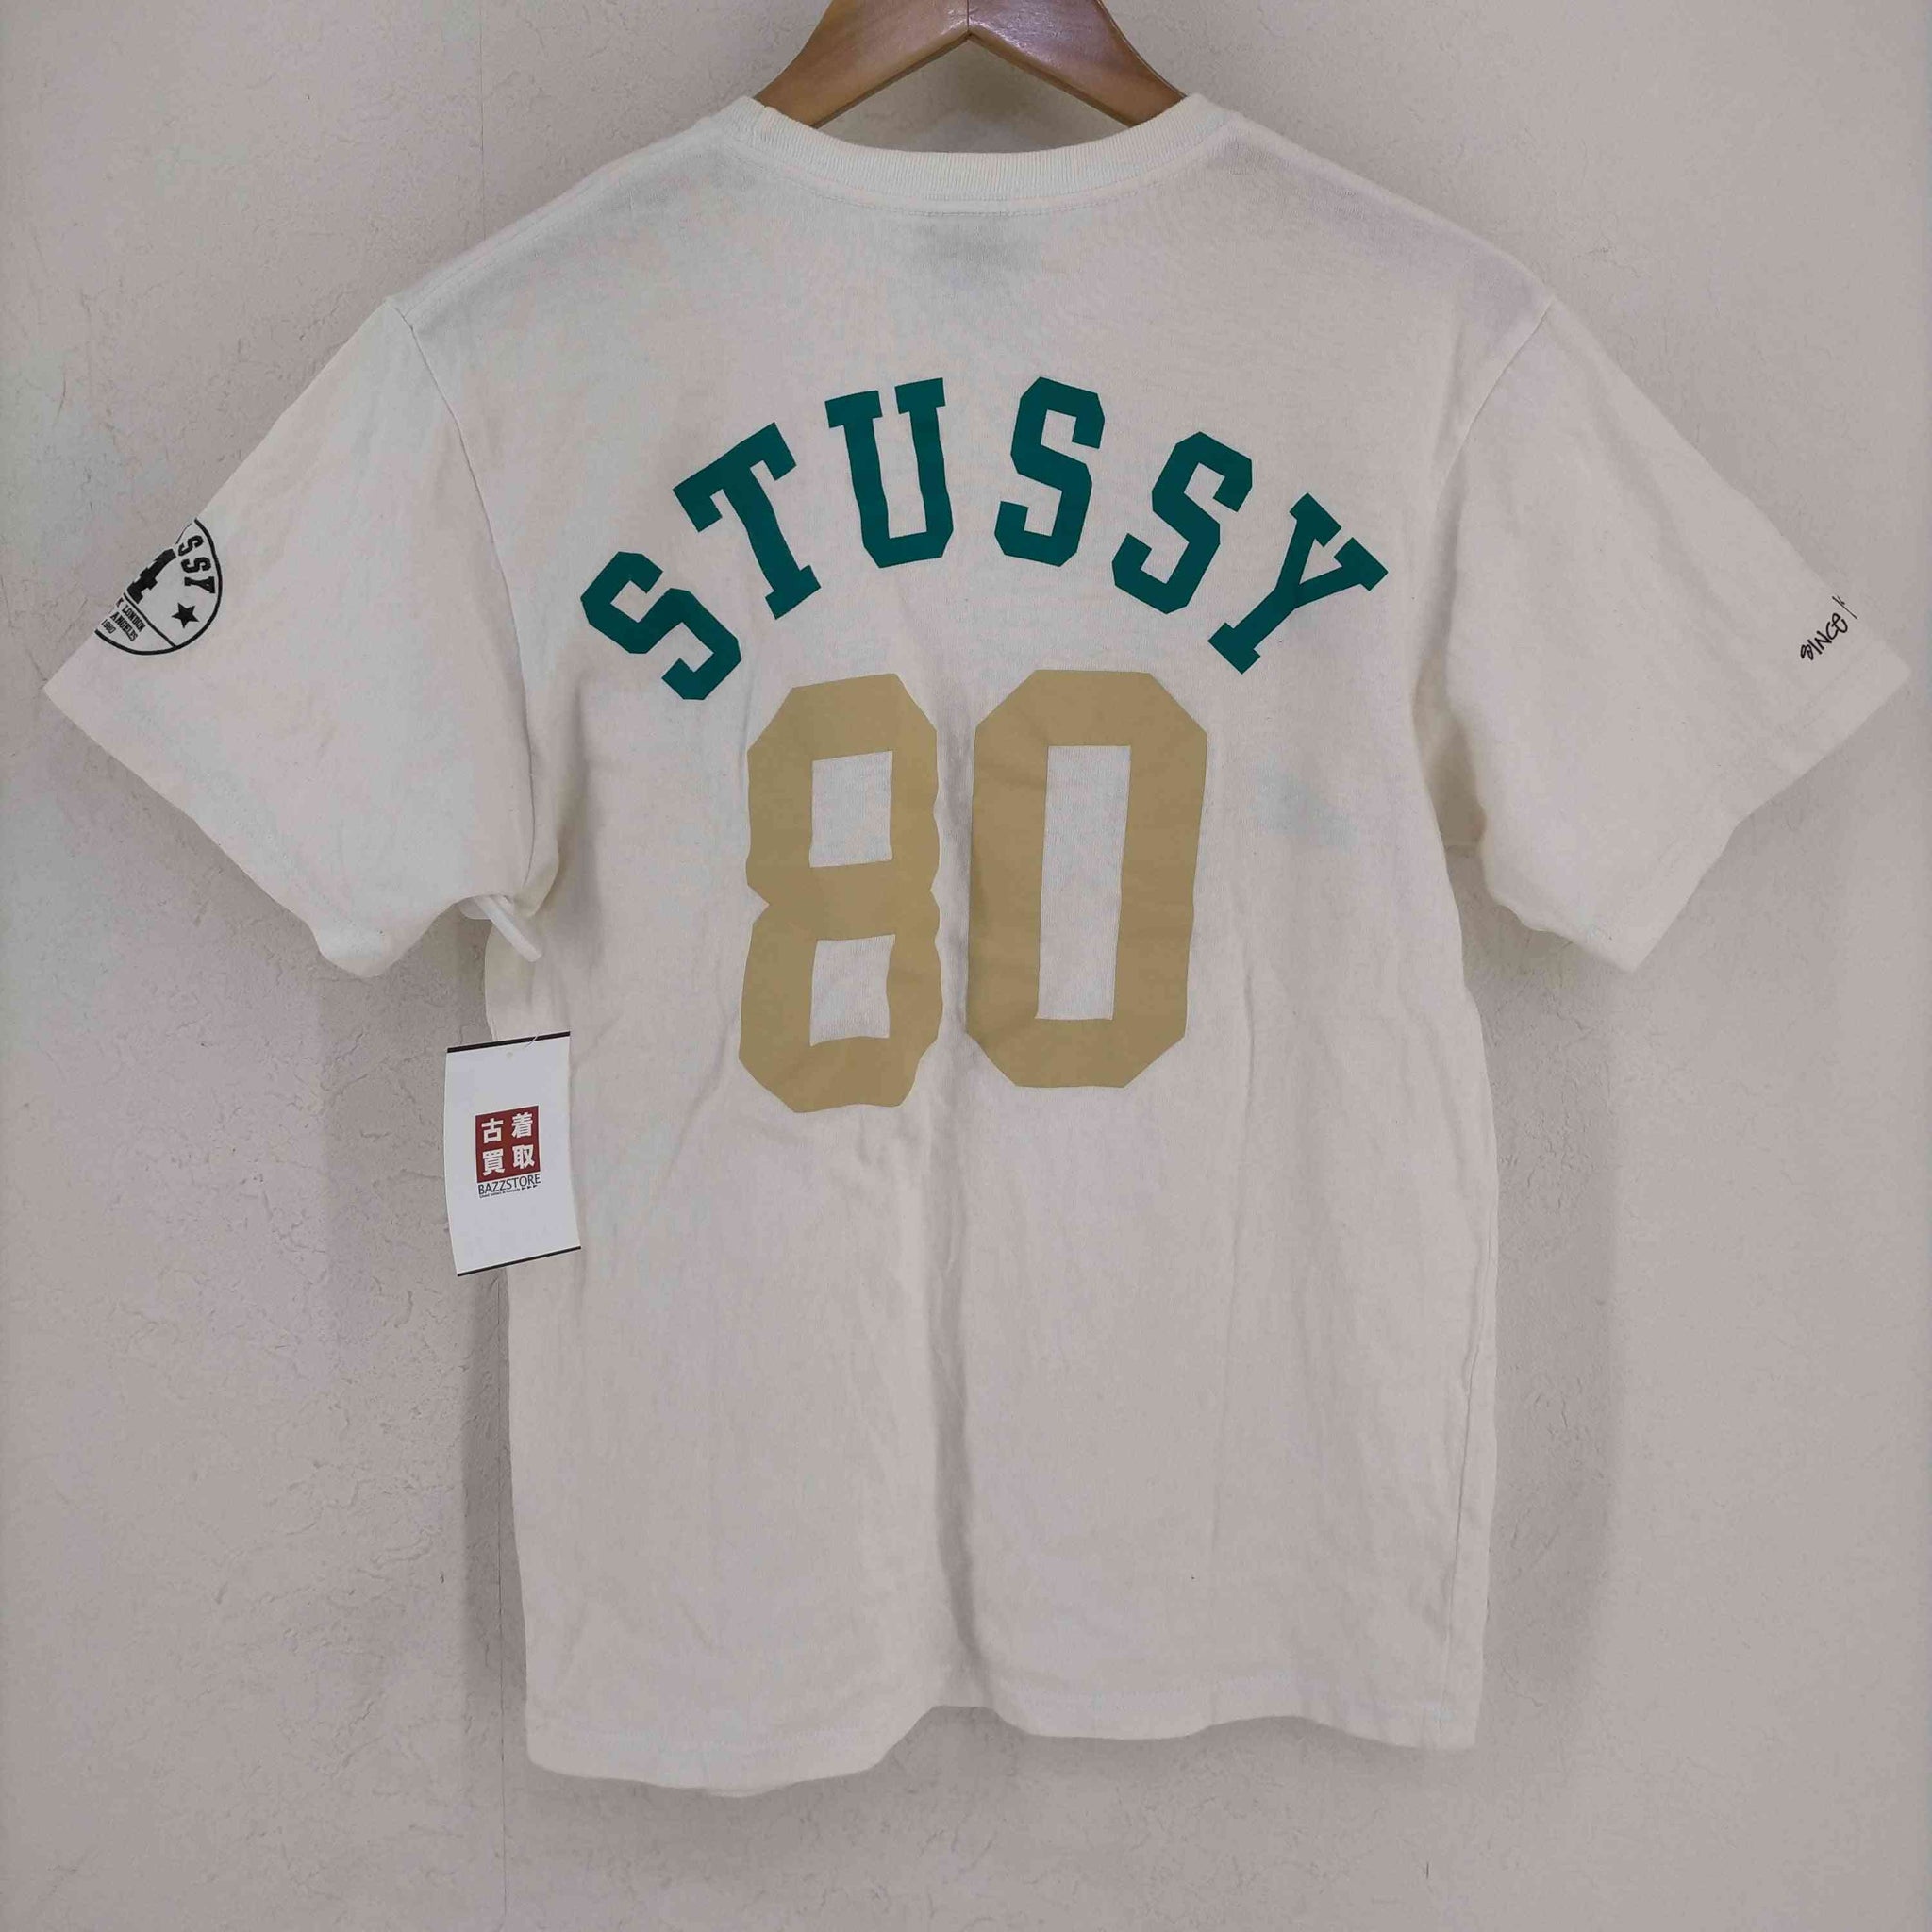 Stussy(ステューシー)ショーンフォントロゴ 80 背番号Tシャツ